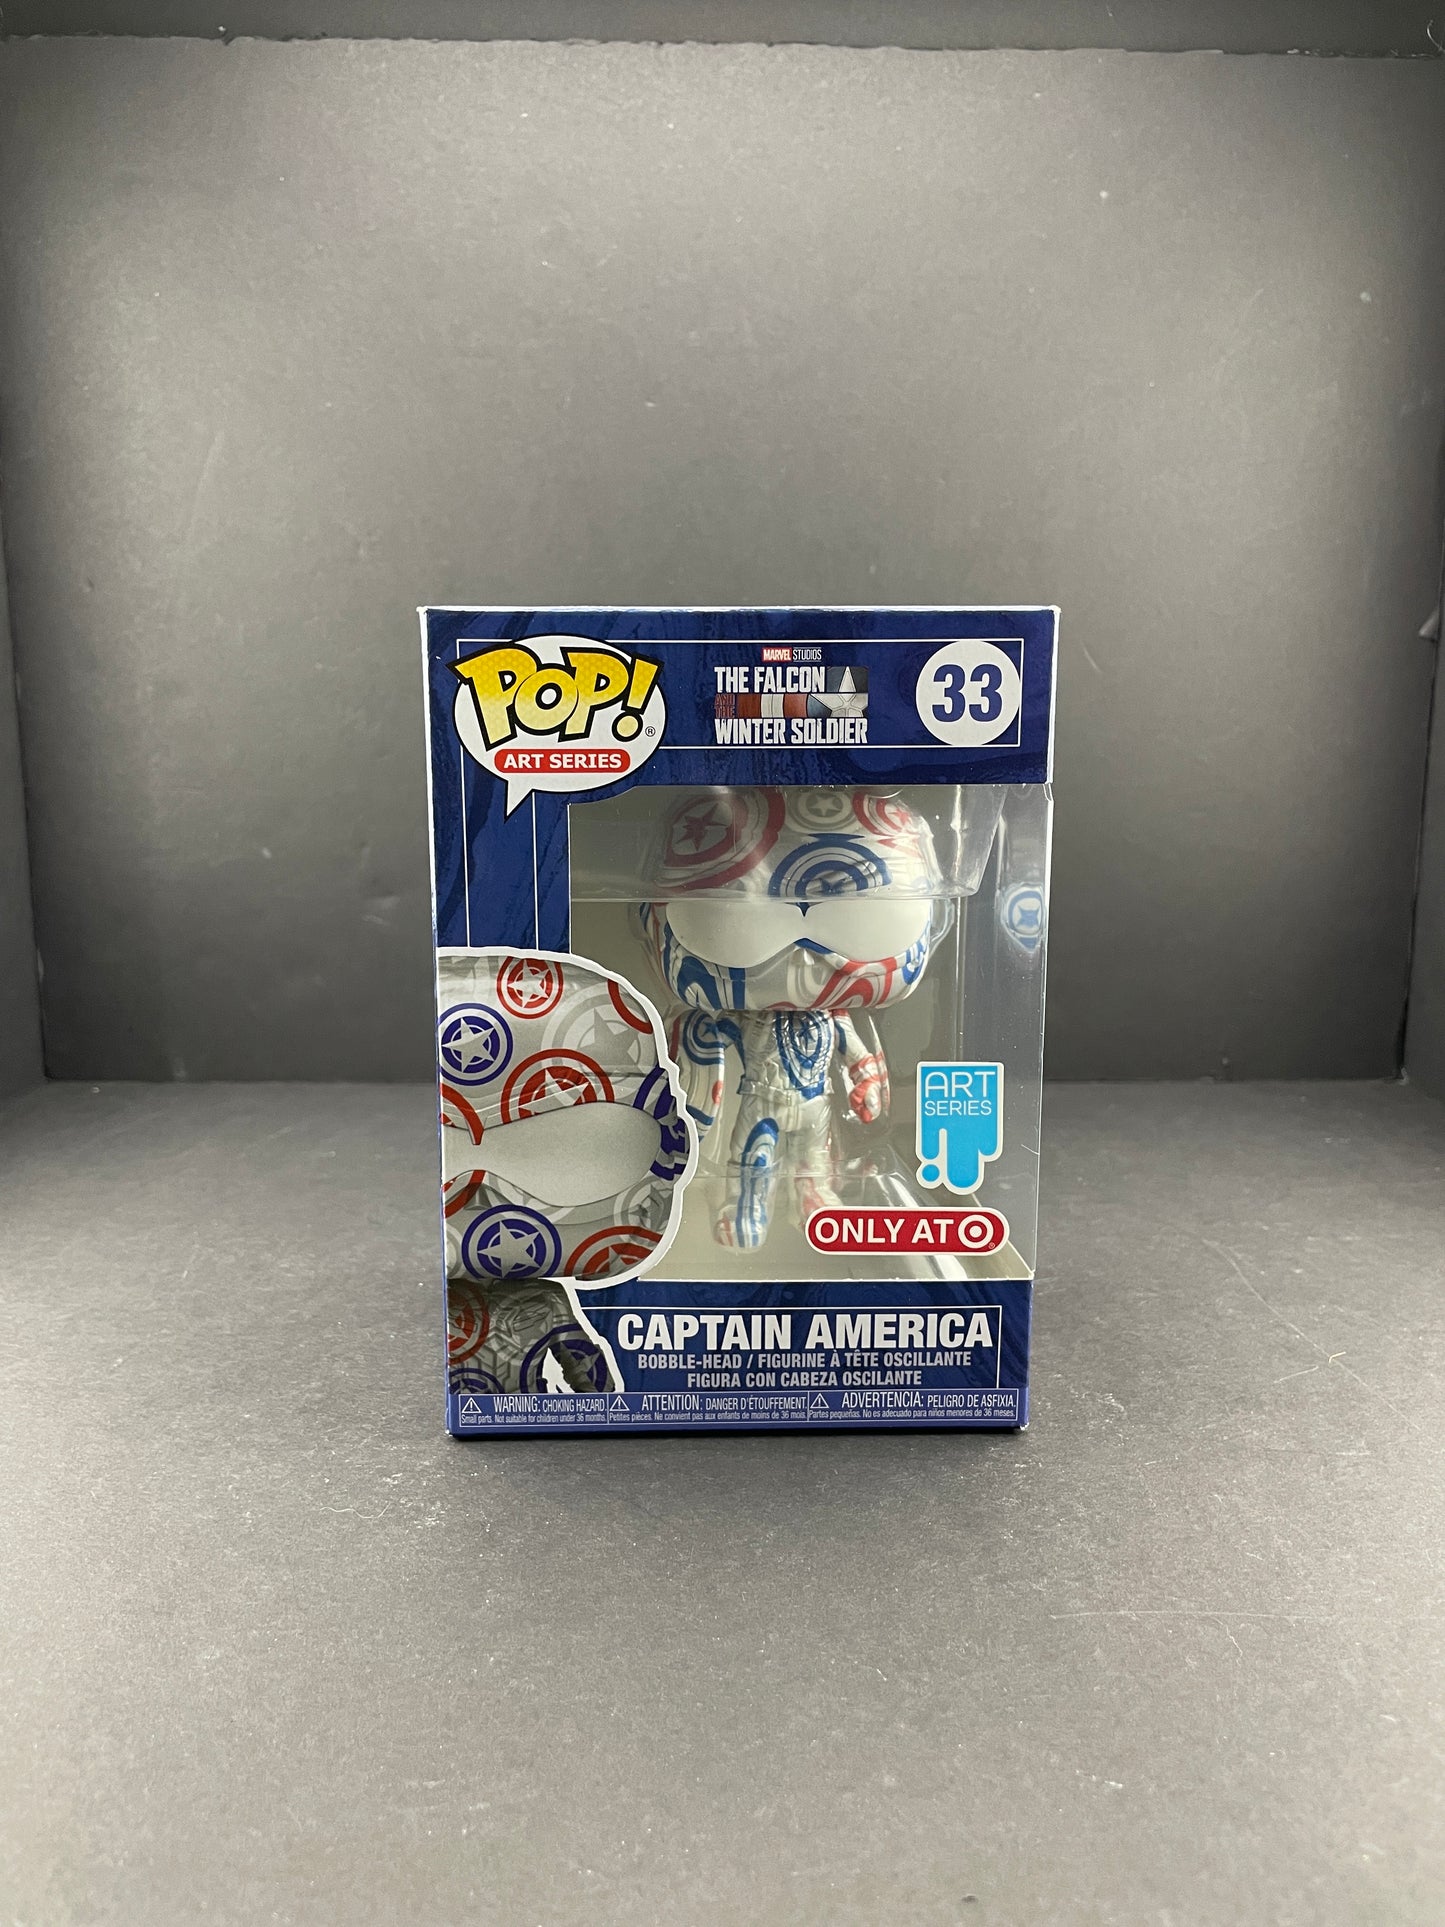 Captain America #32 (Art Series)